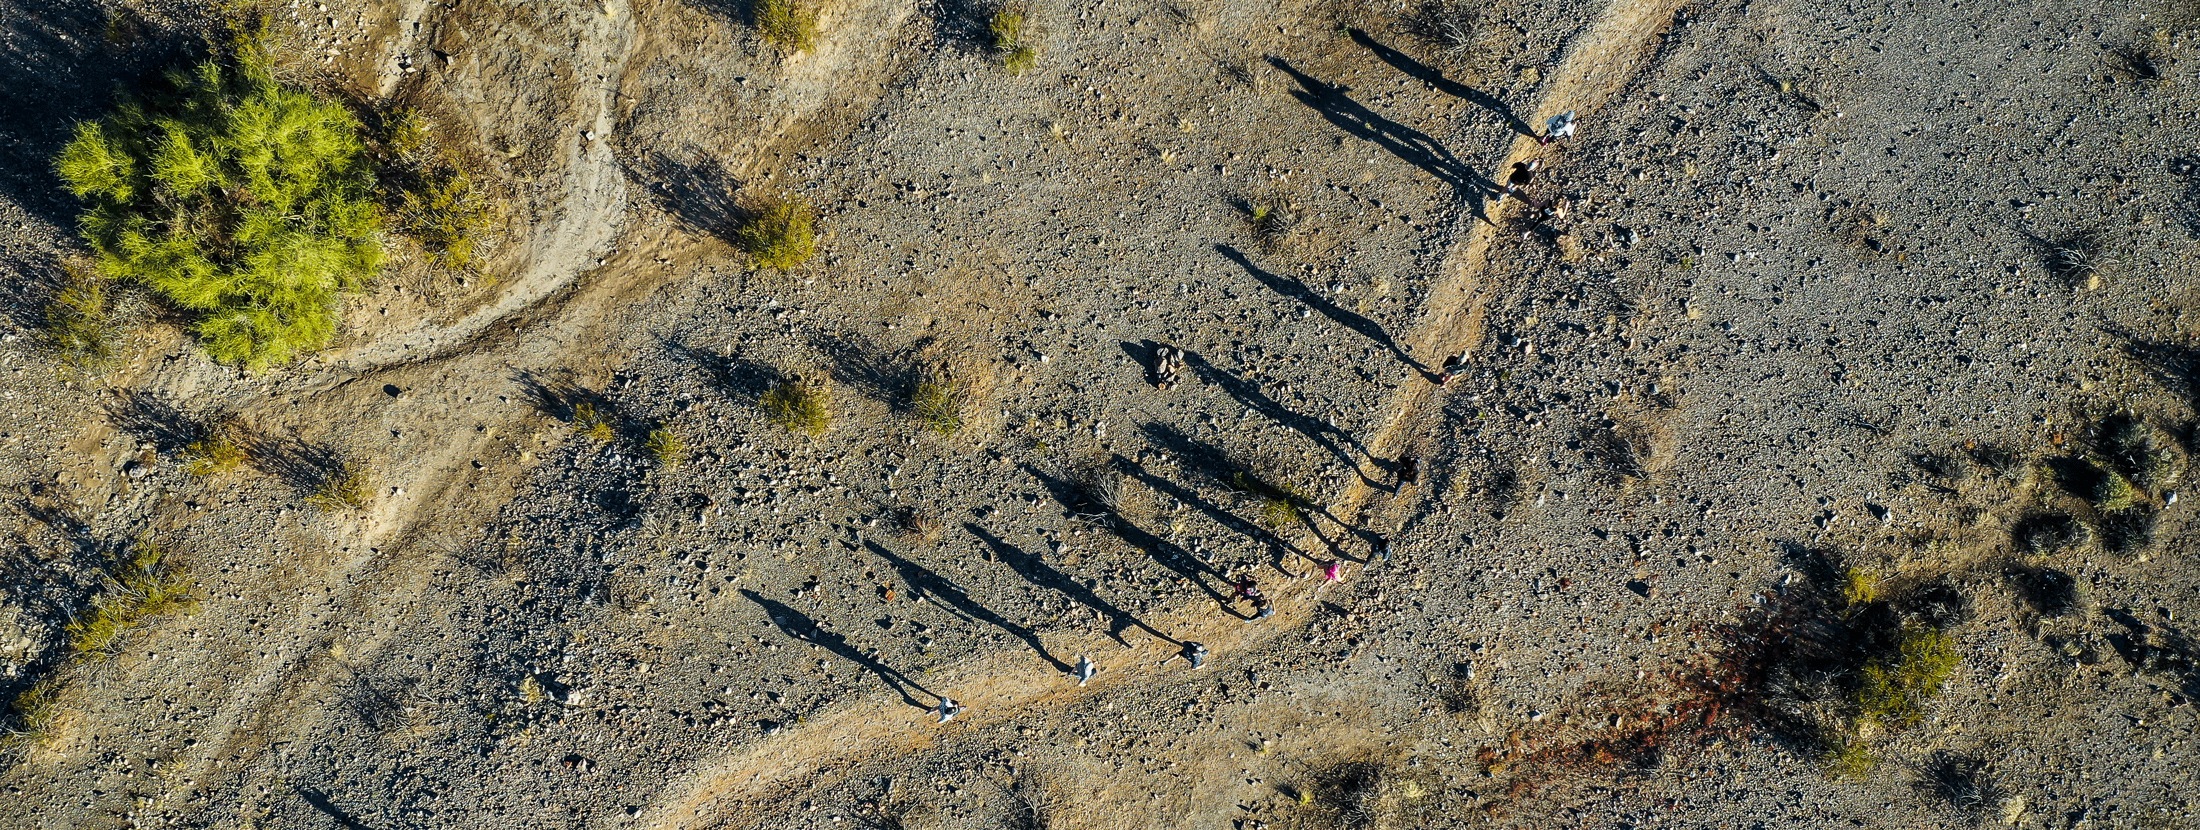 Arizona Running Trail from drone